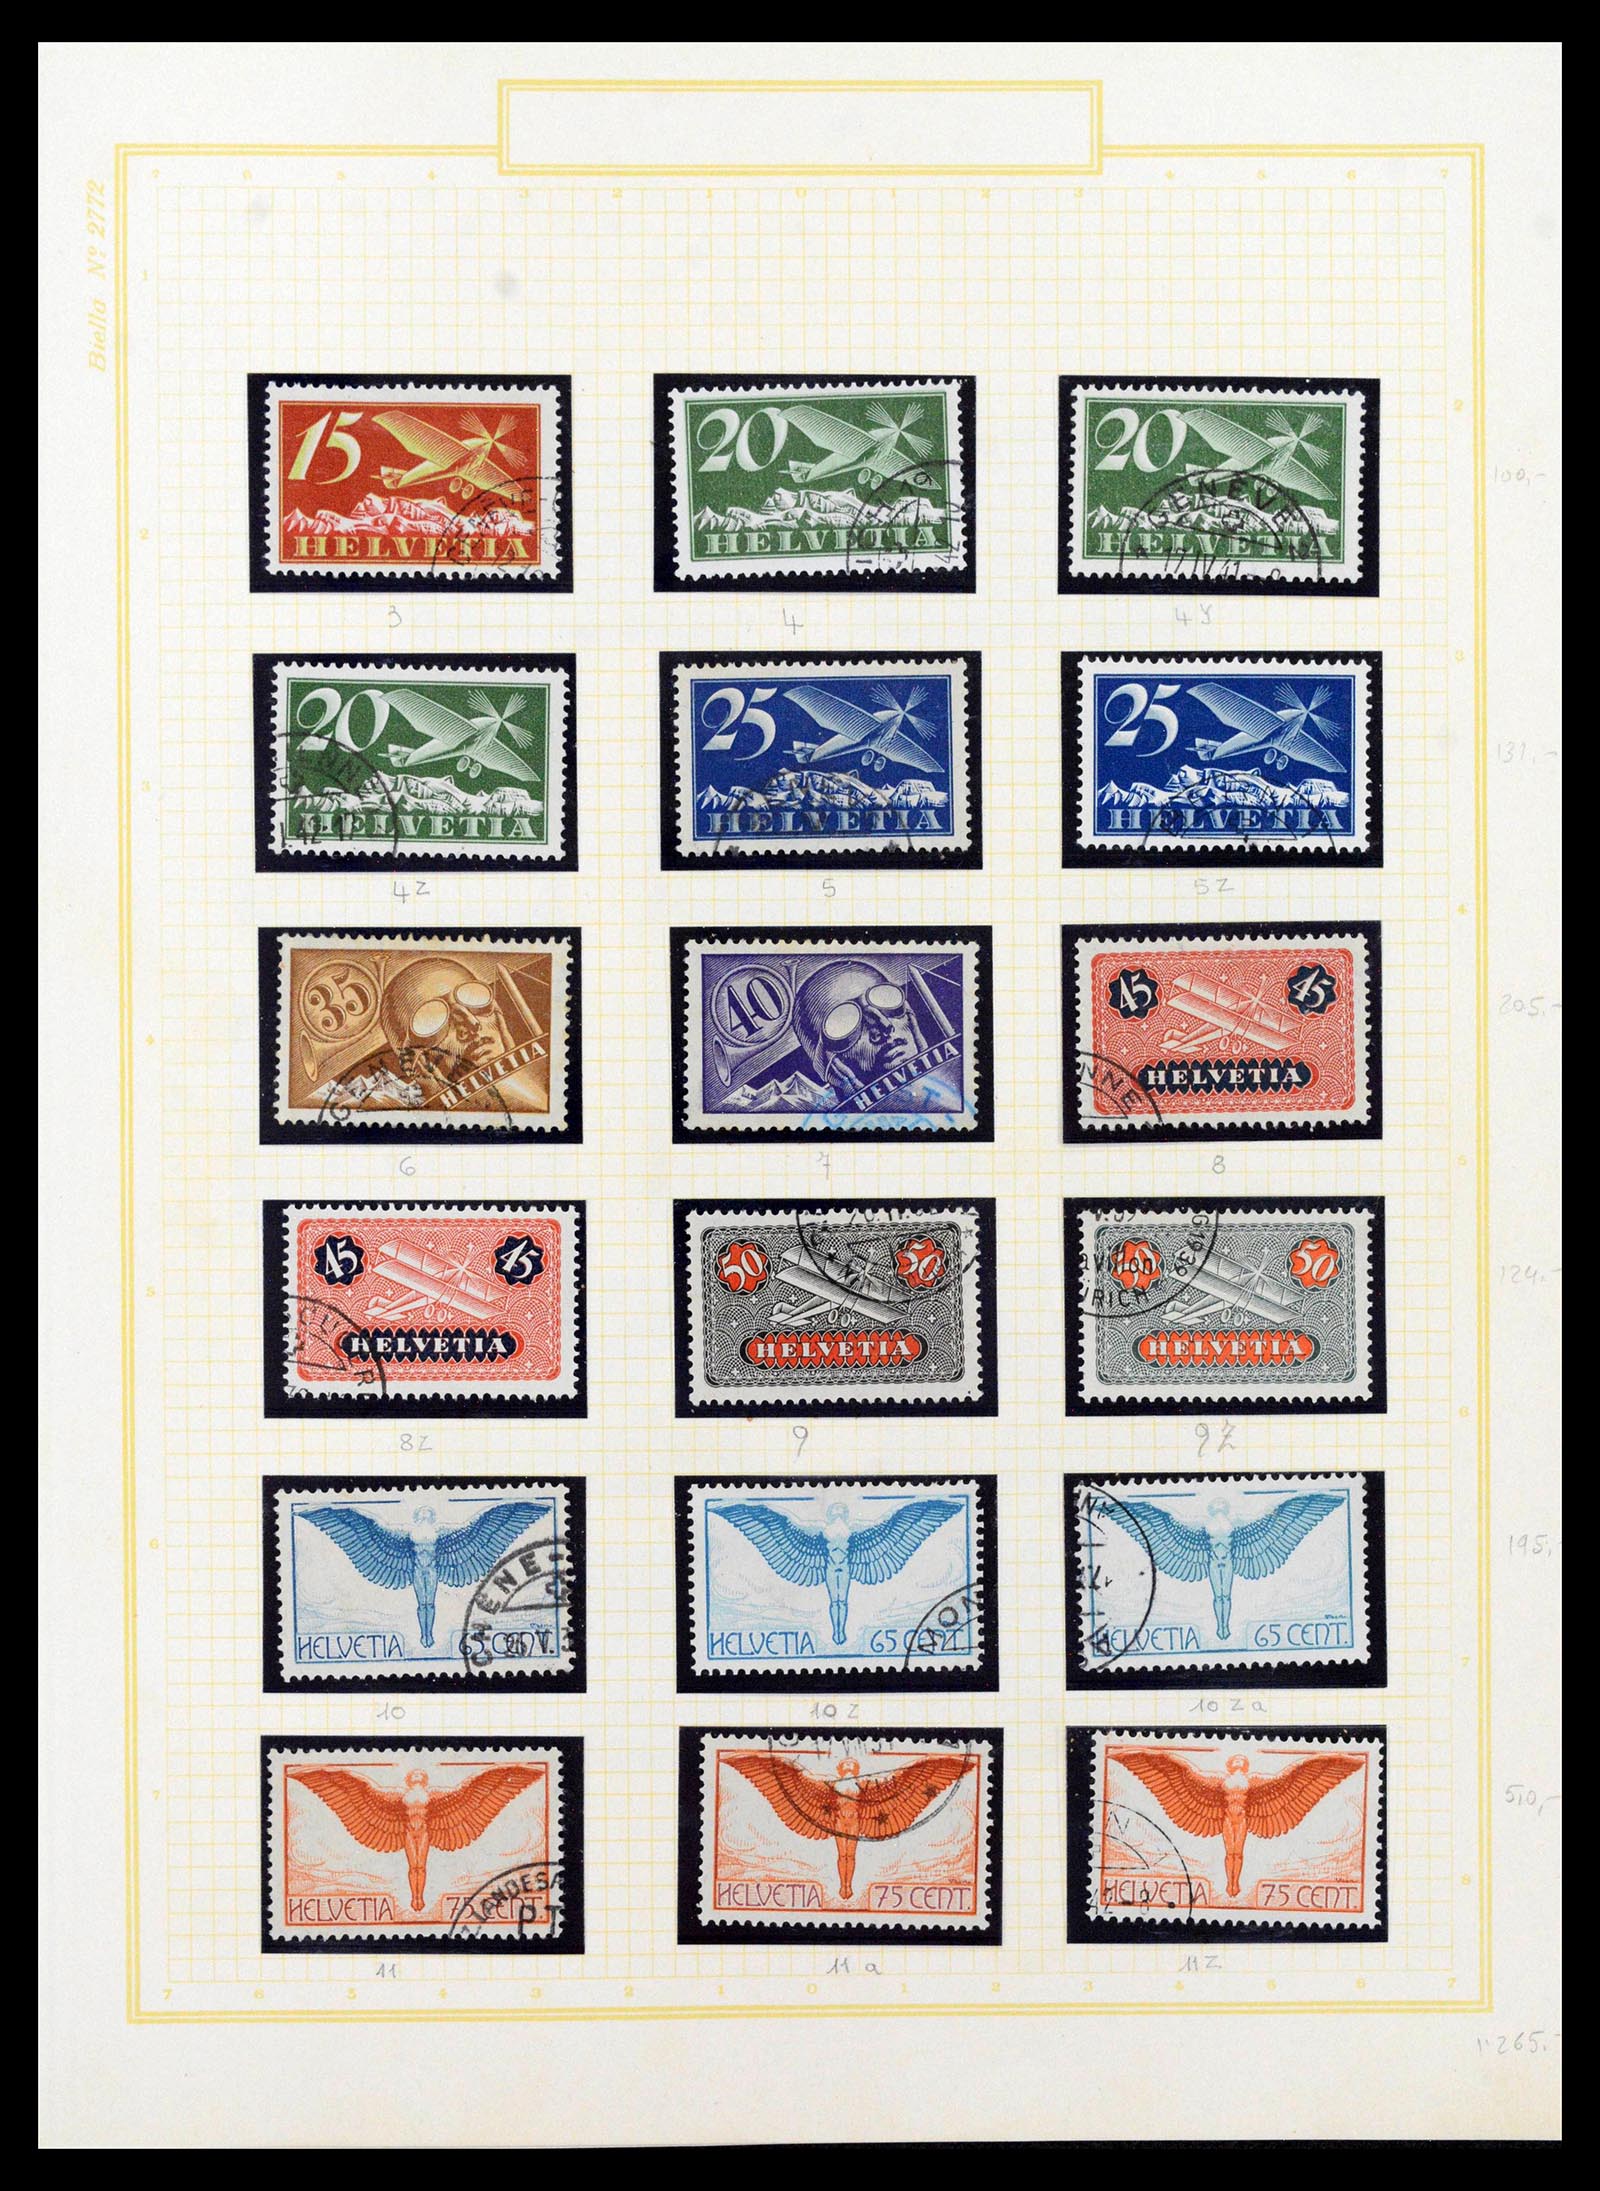 39103 0045 - Stamp collection 39103 Switzerland 1920-1988.